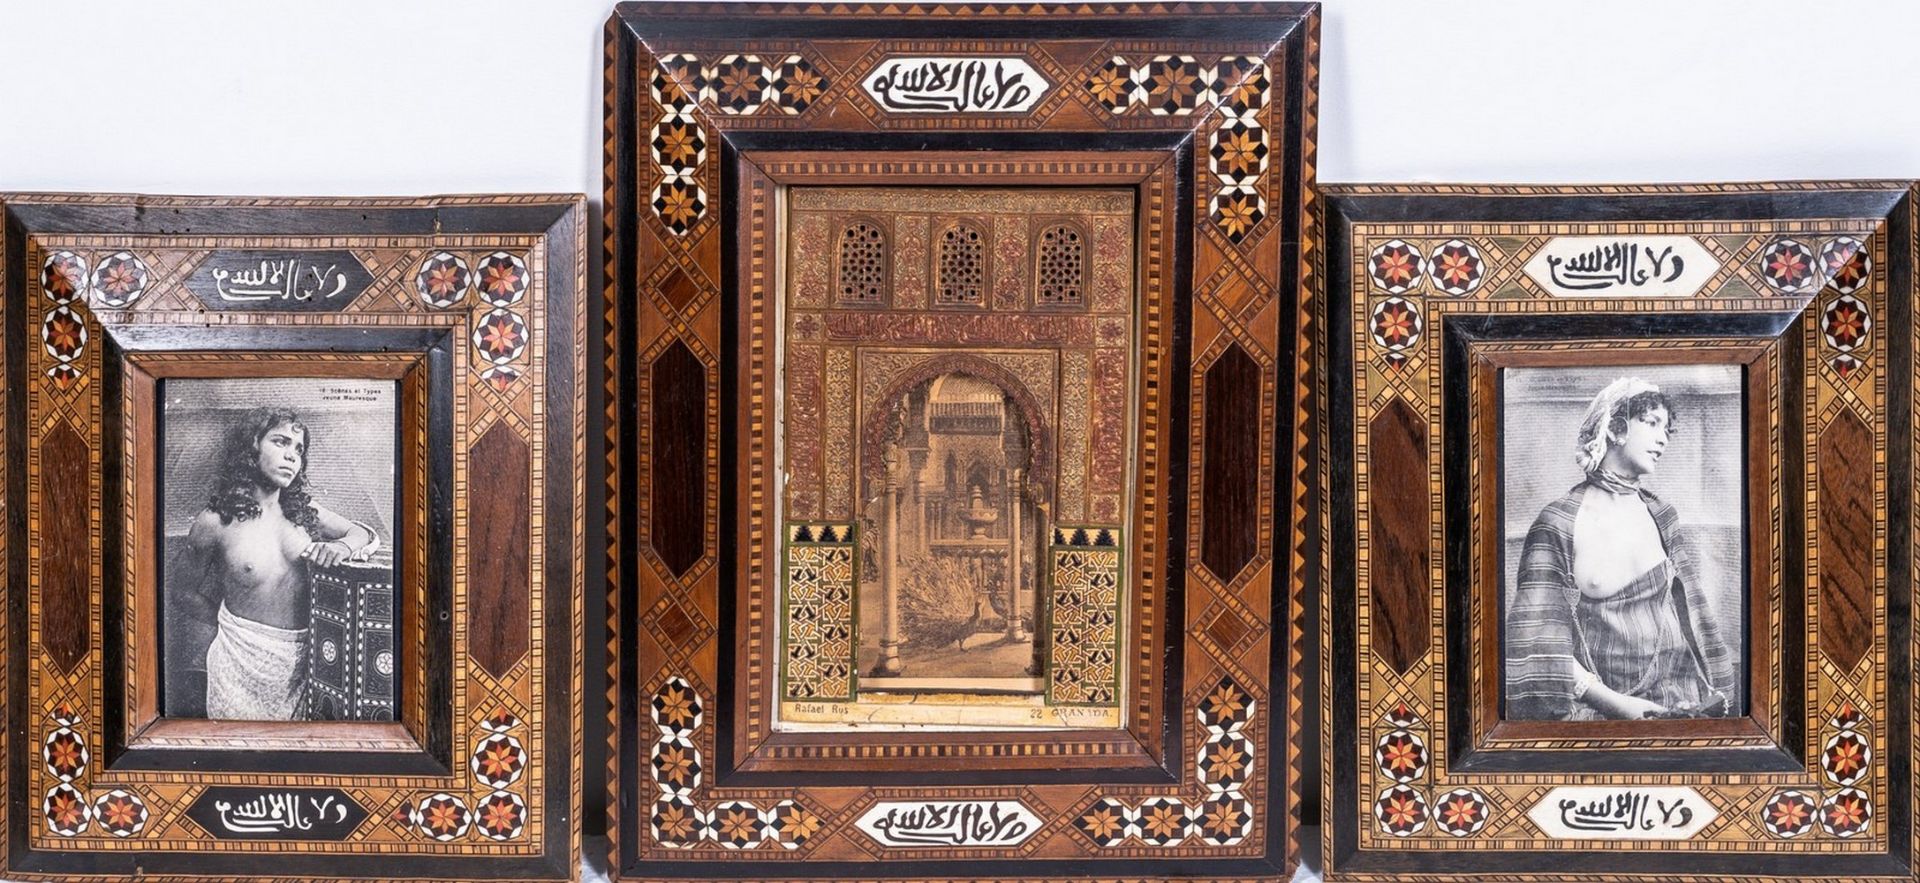 Arte Islamica